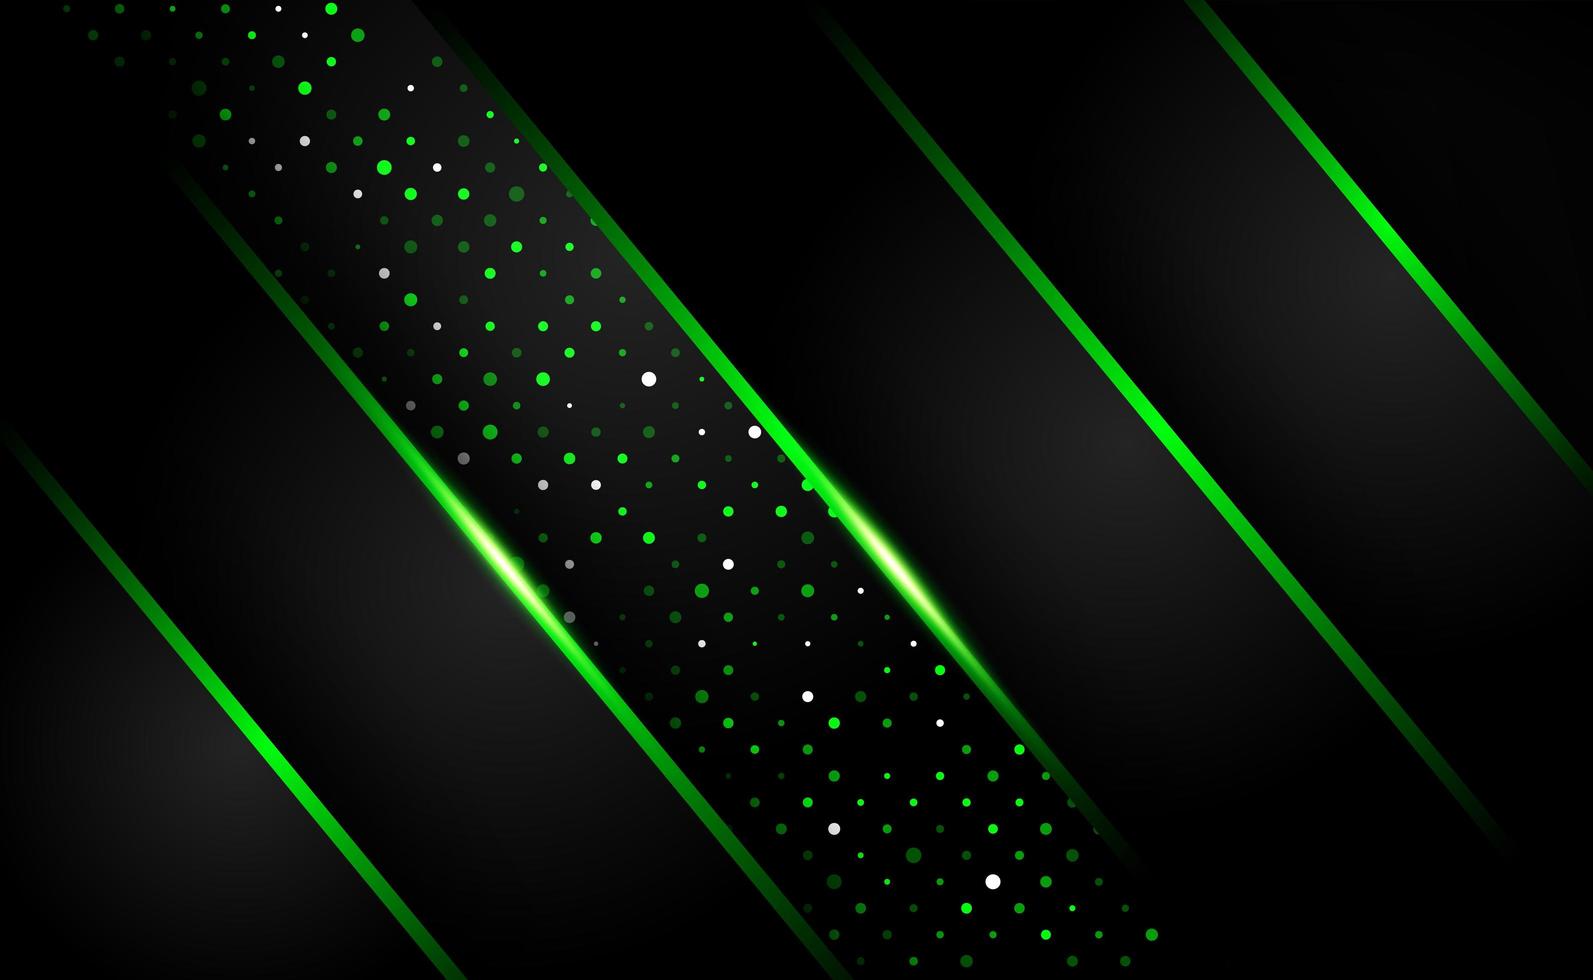 abstract shiny dark green shape overlap background technology vector